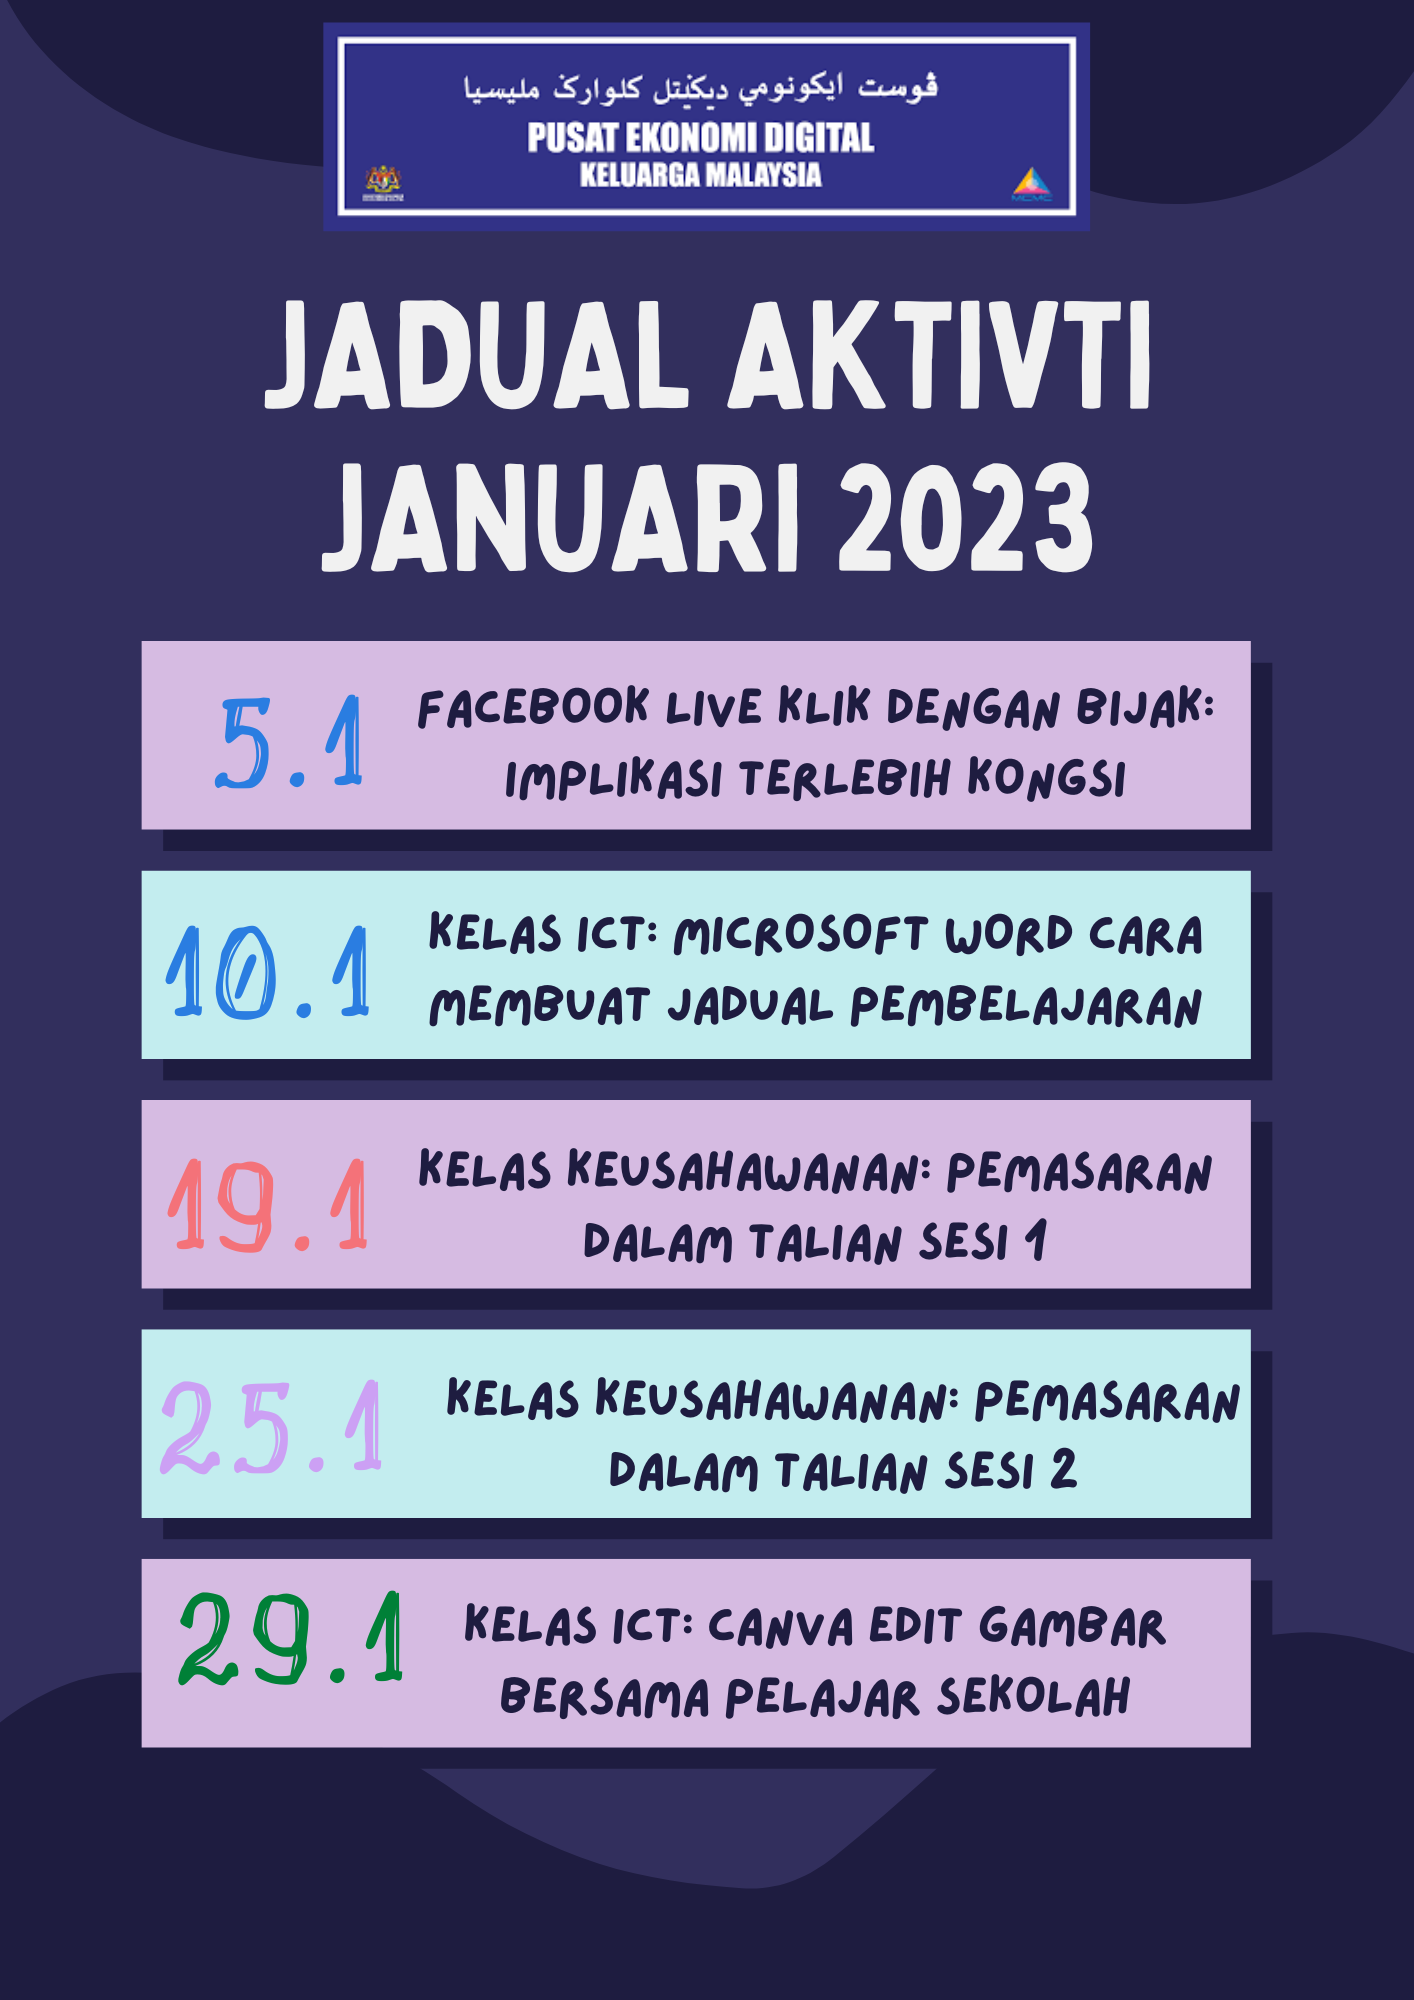 JADUAL AKTIVITI JAN 2023